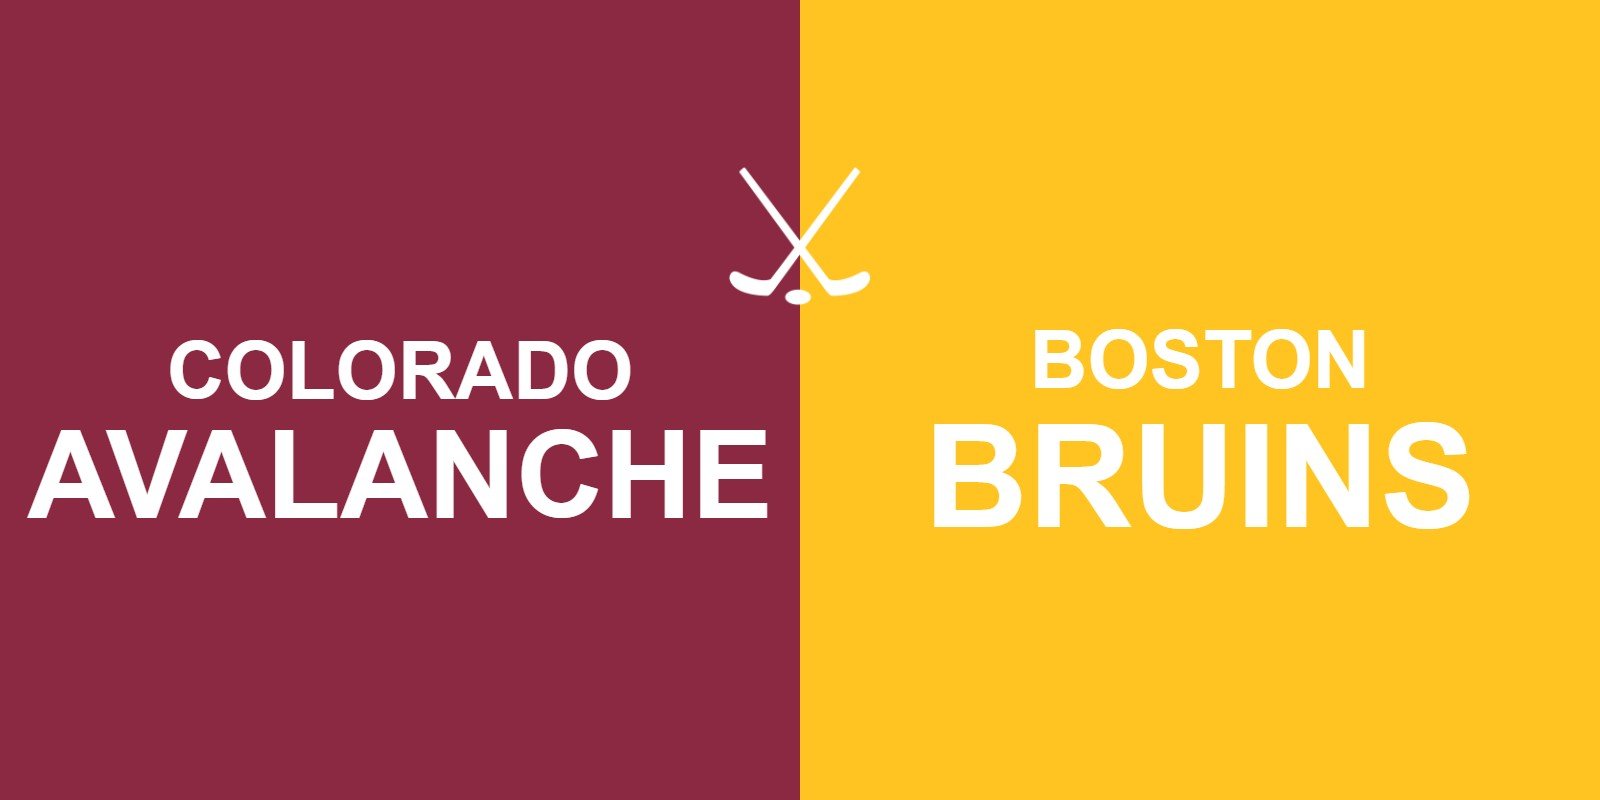 Avalanche vs Bruins